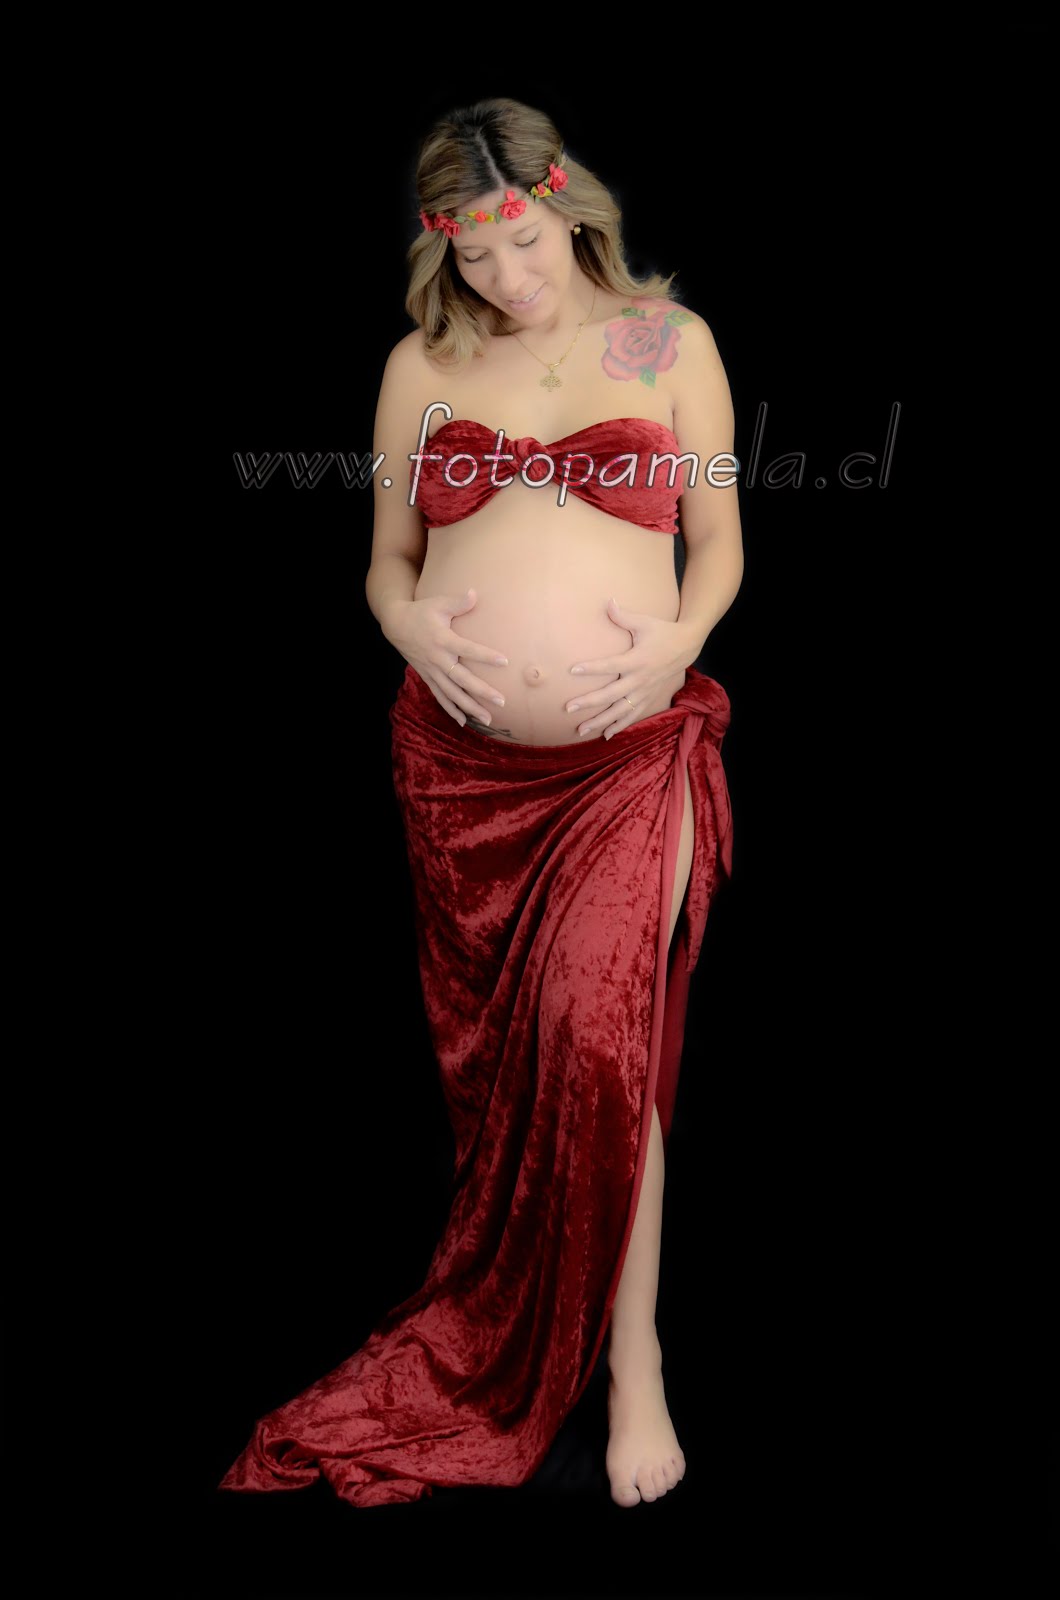 embarazada ropa roja estudio fotografico chile providencia